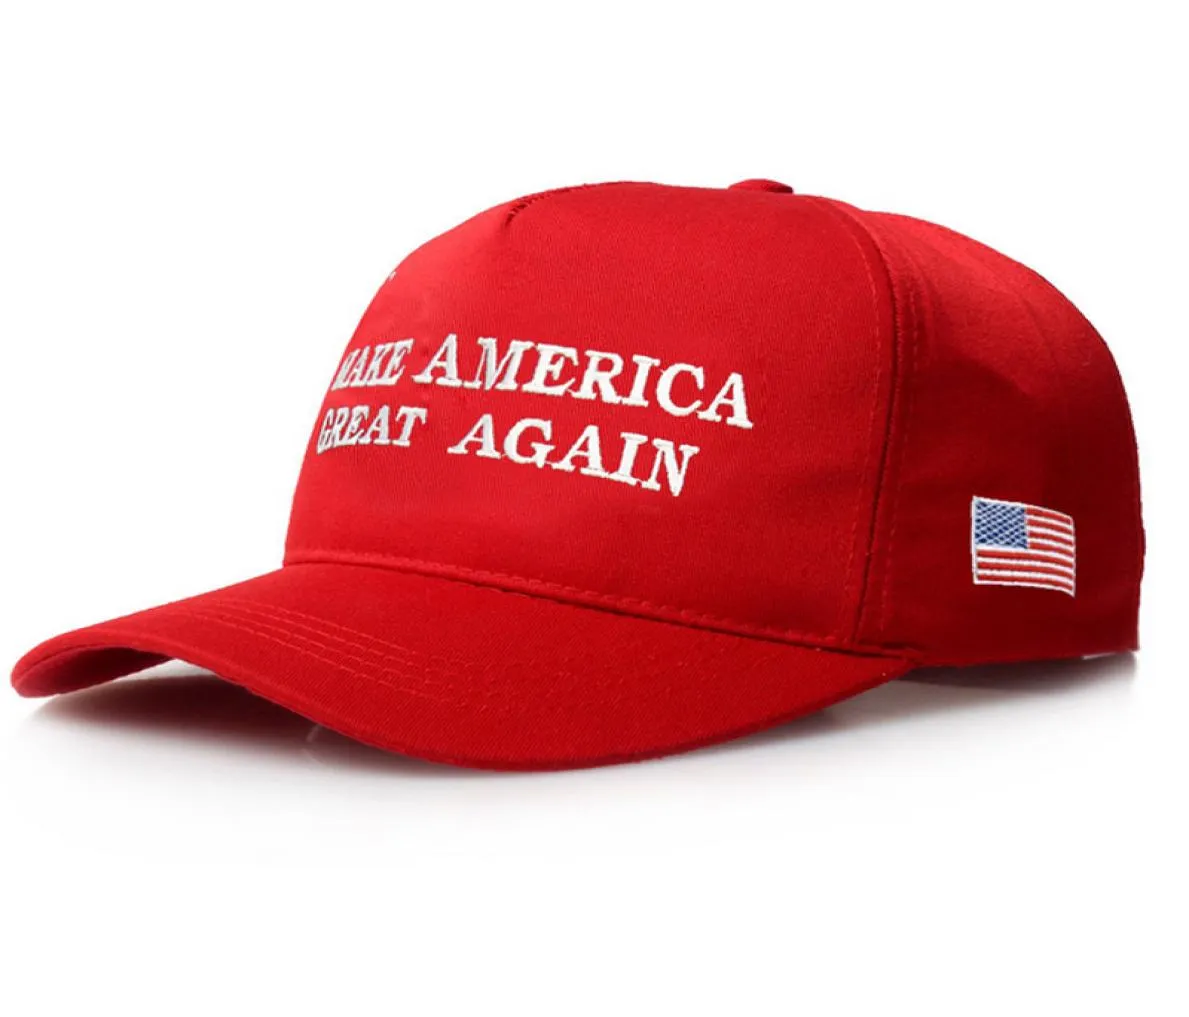 Ball Caps Baseball Make America Great Again Hat Republican Adjustable Mesh Cap Political Unisex F154020198